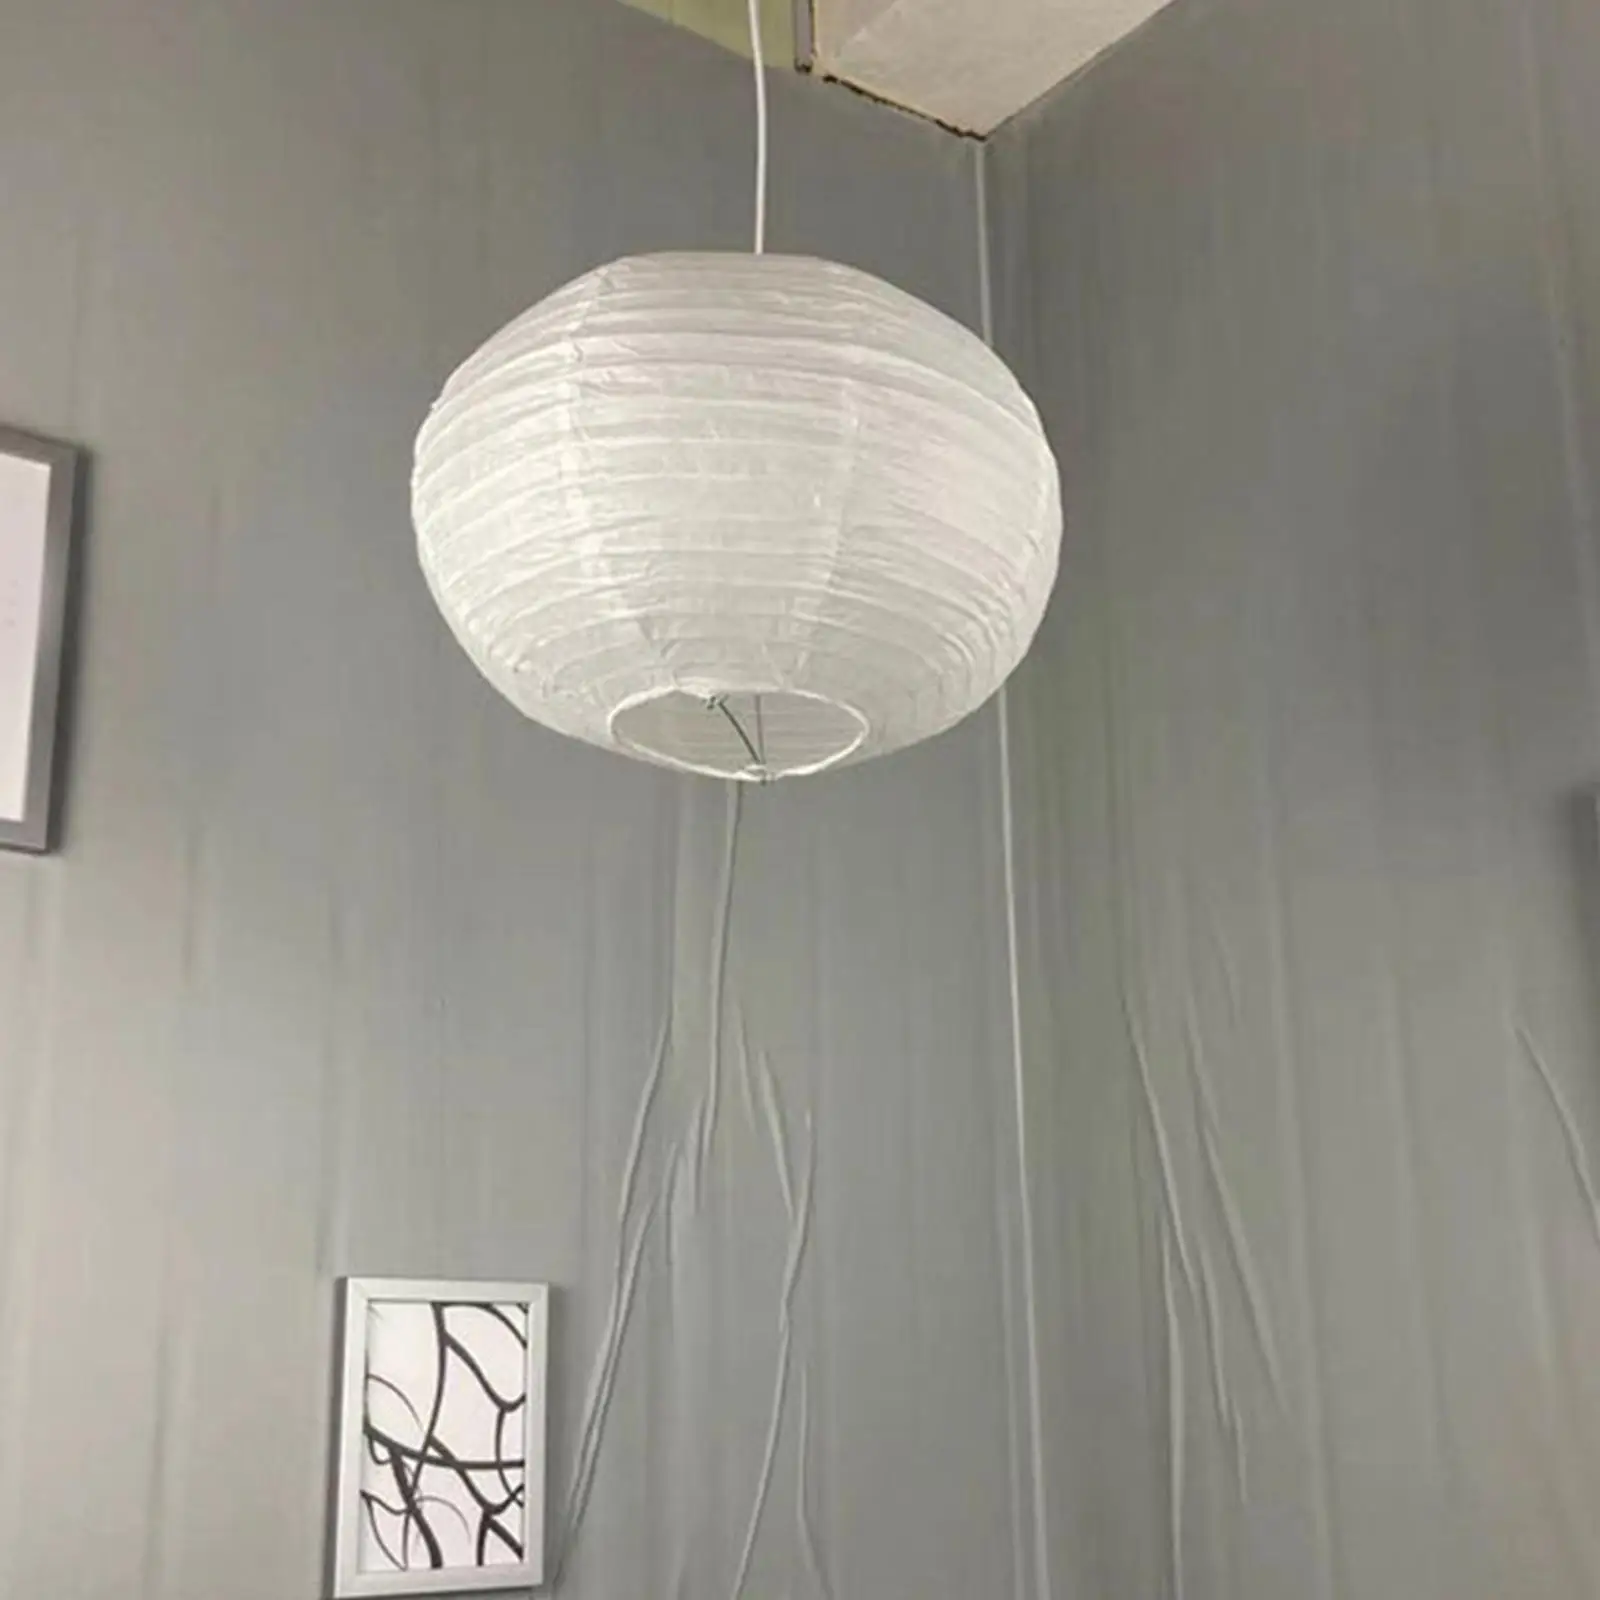 Retro Style Pendant Lamp Shade Ceiling Light Shade Paper Decor Cafe Kitchen